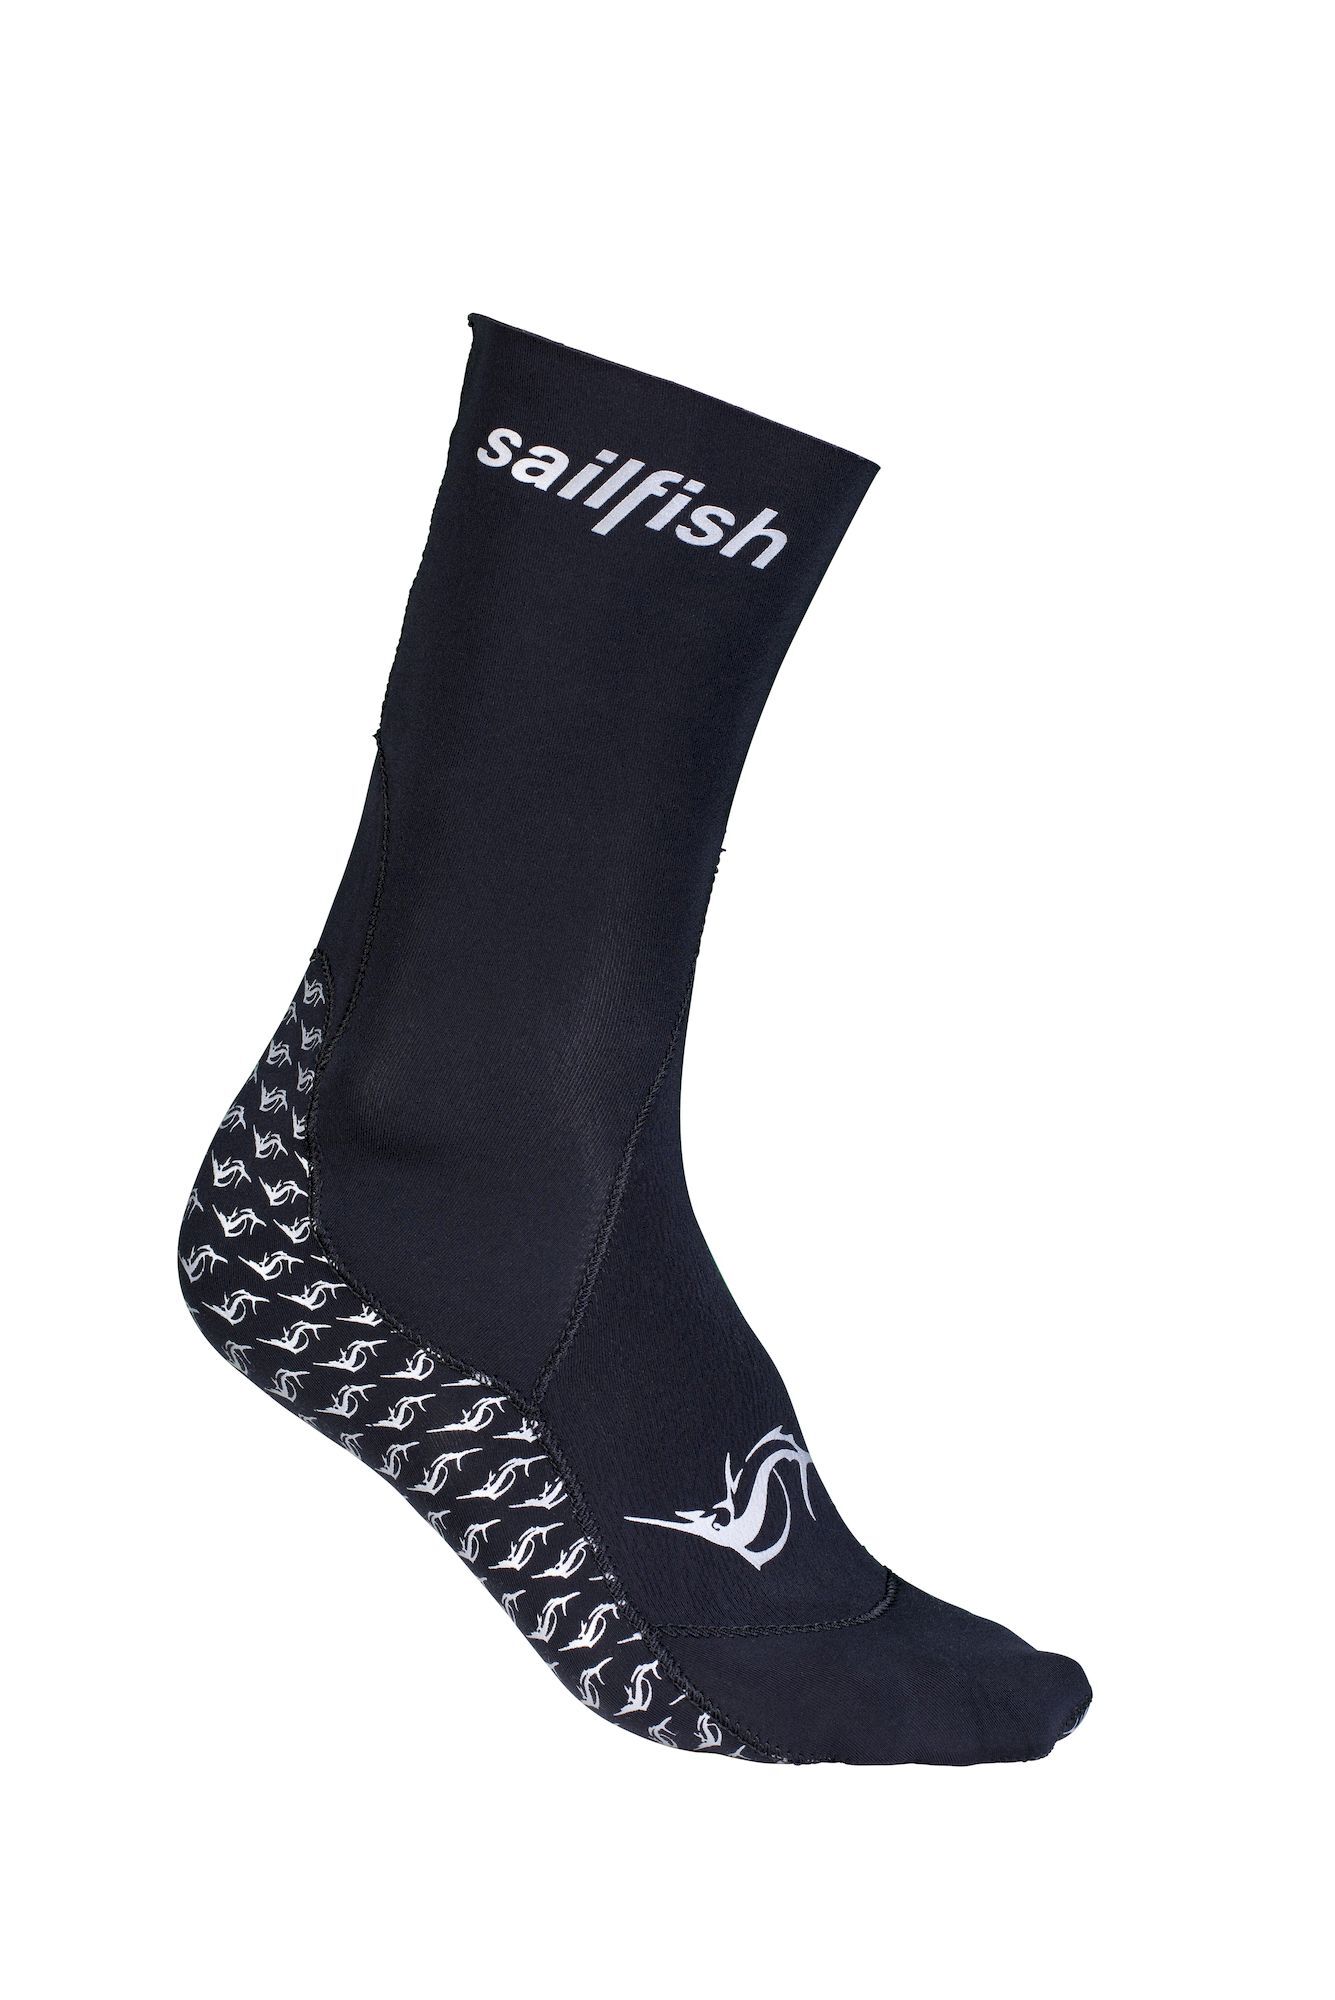 Sailfish Neoprene Socks - Neoprene shoes | Hardloop